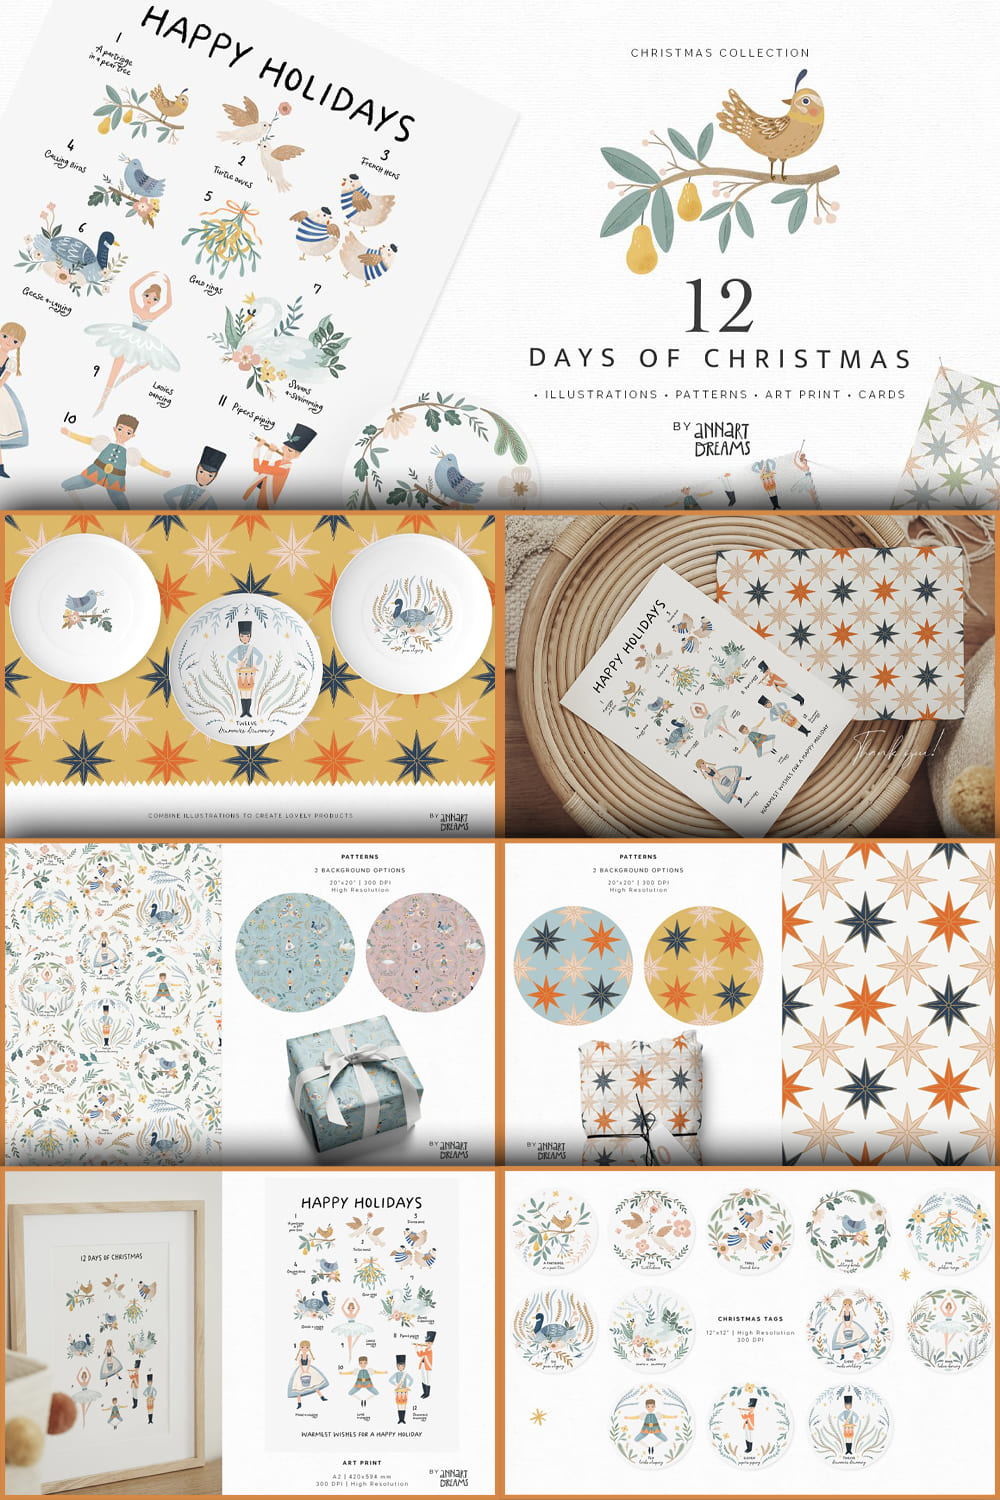 12 Days Of Christmas - Pinterest.